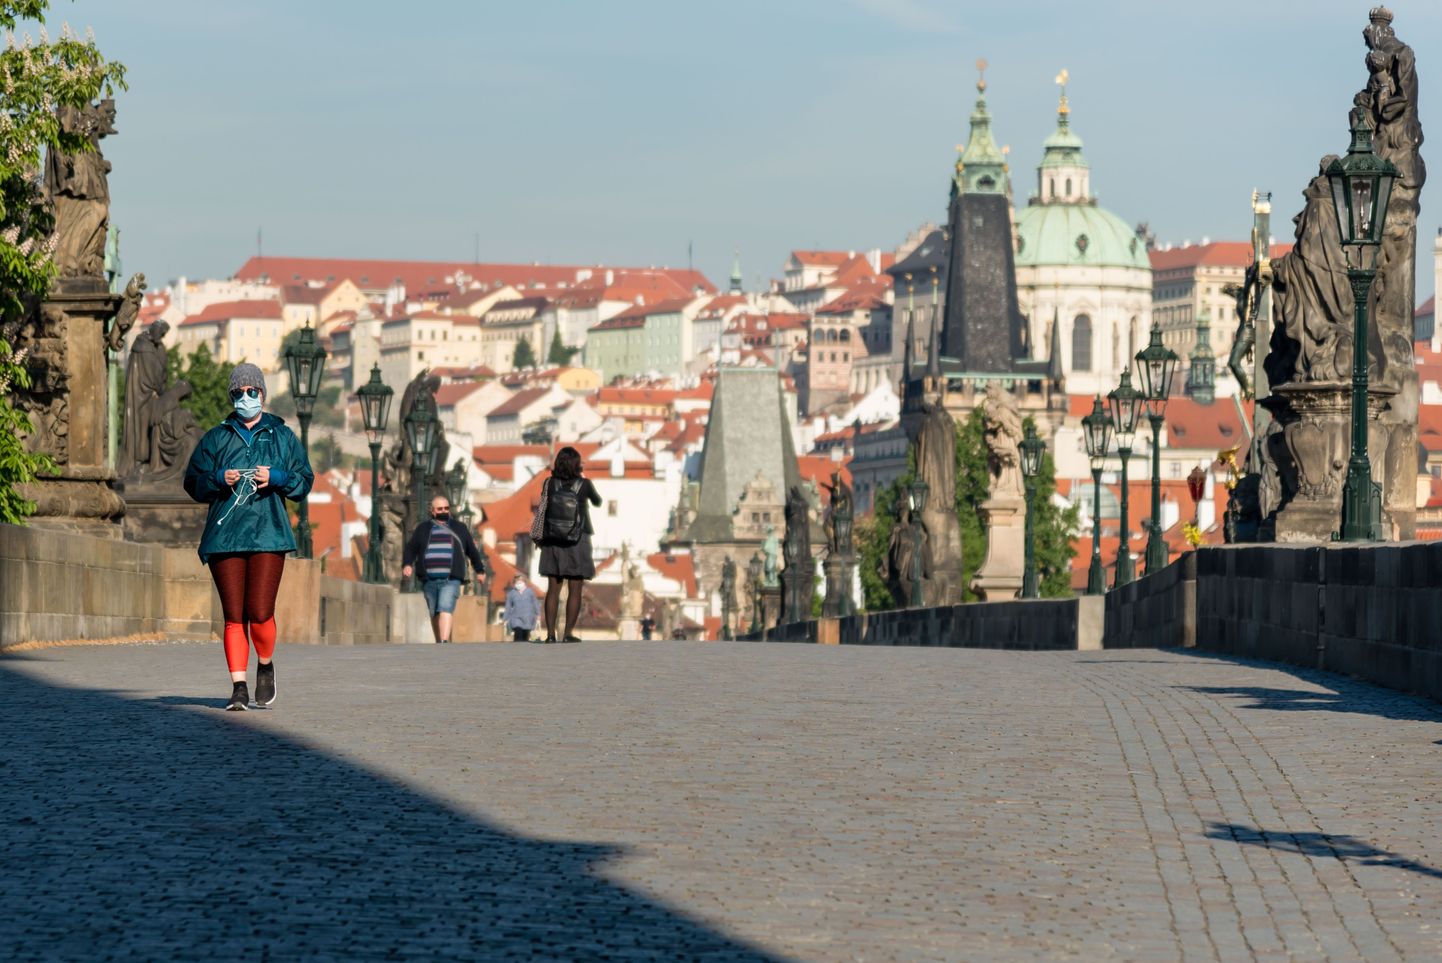 Kaitsemaskis naine jalutamas Prahas Karli sillal.